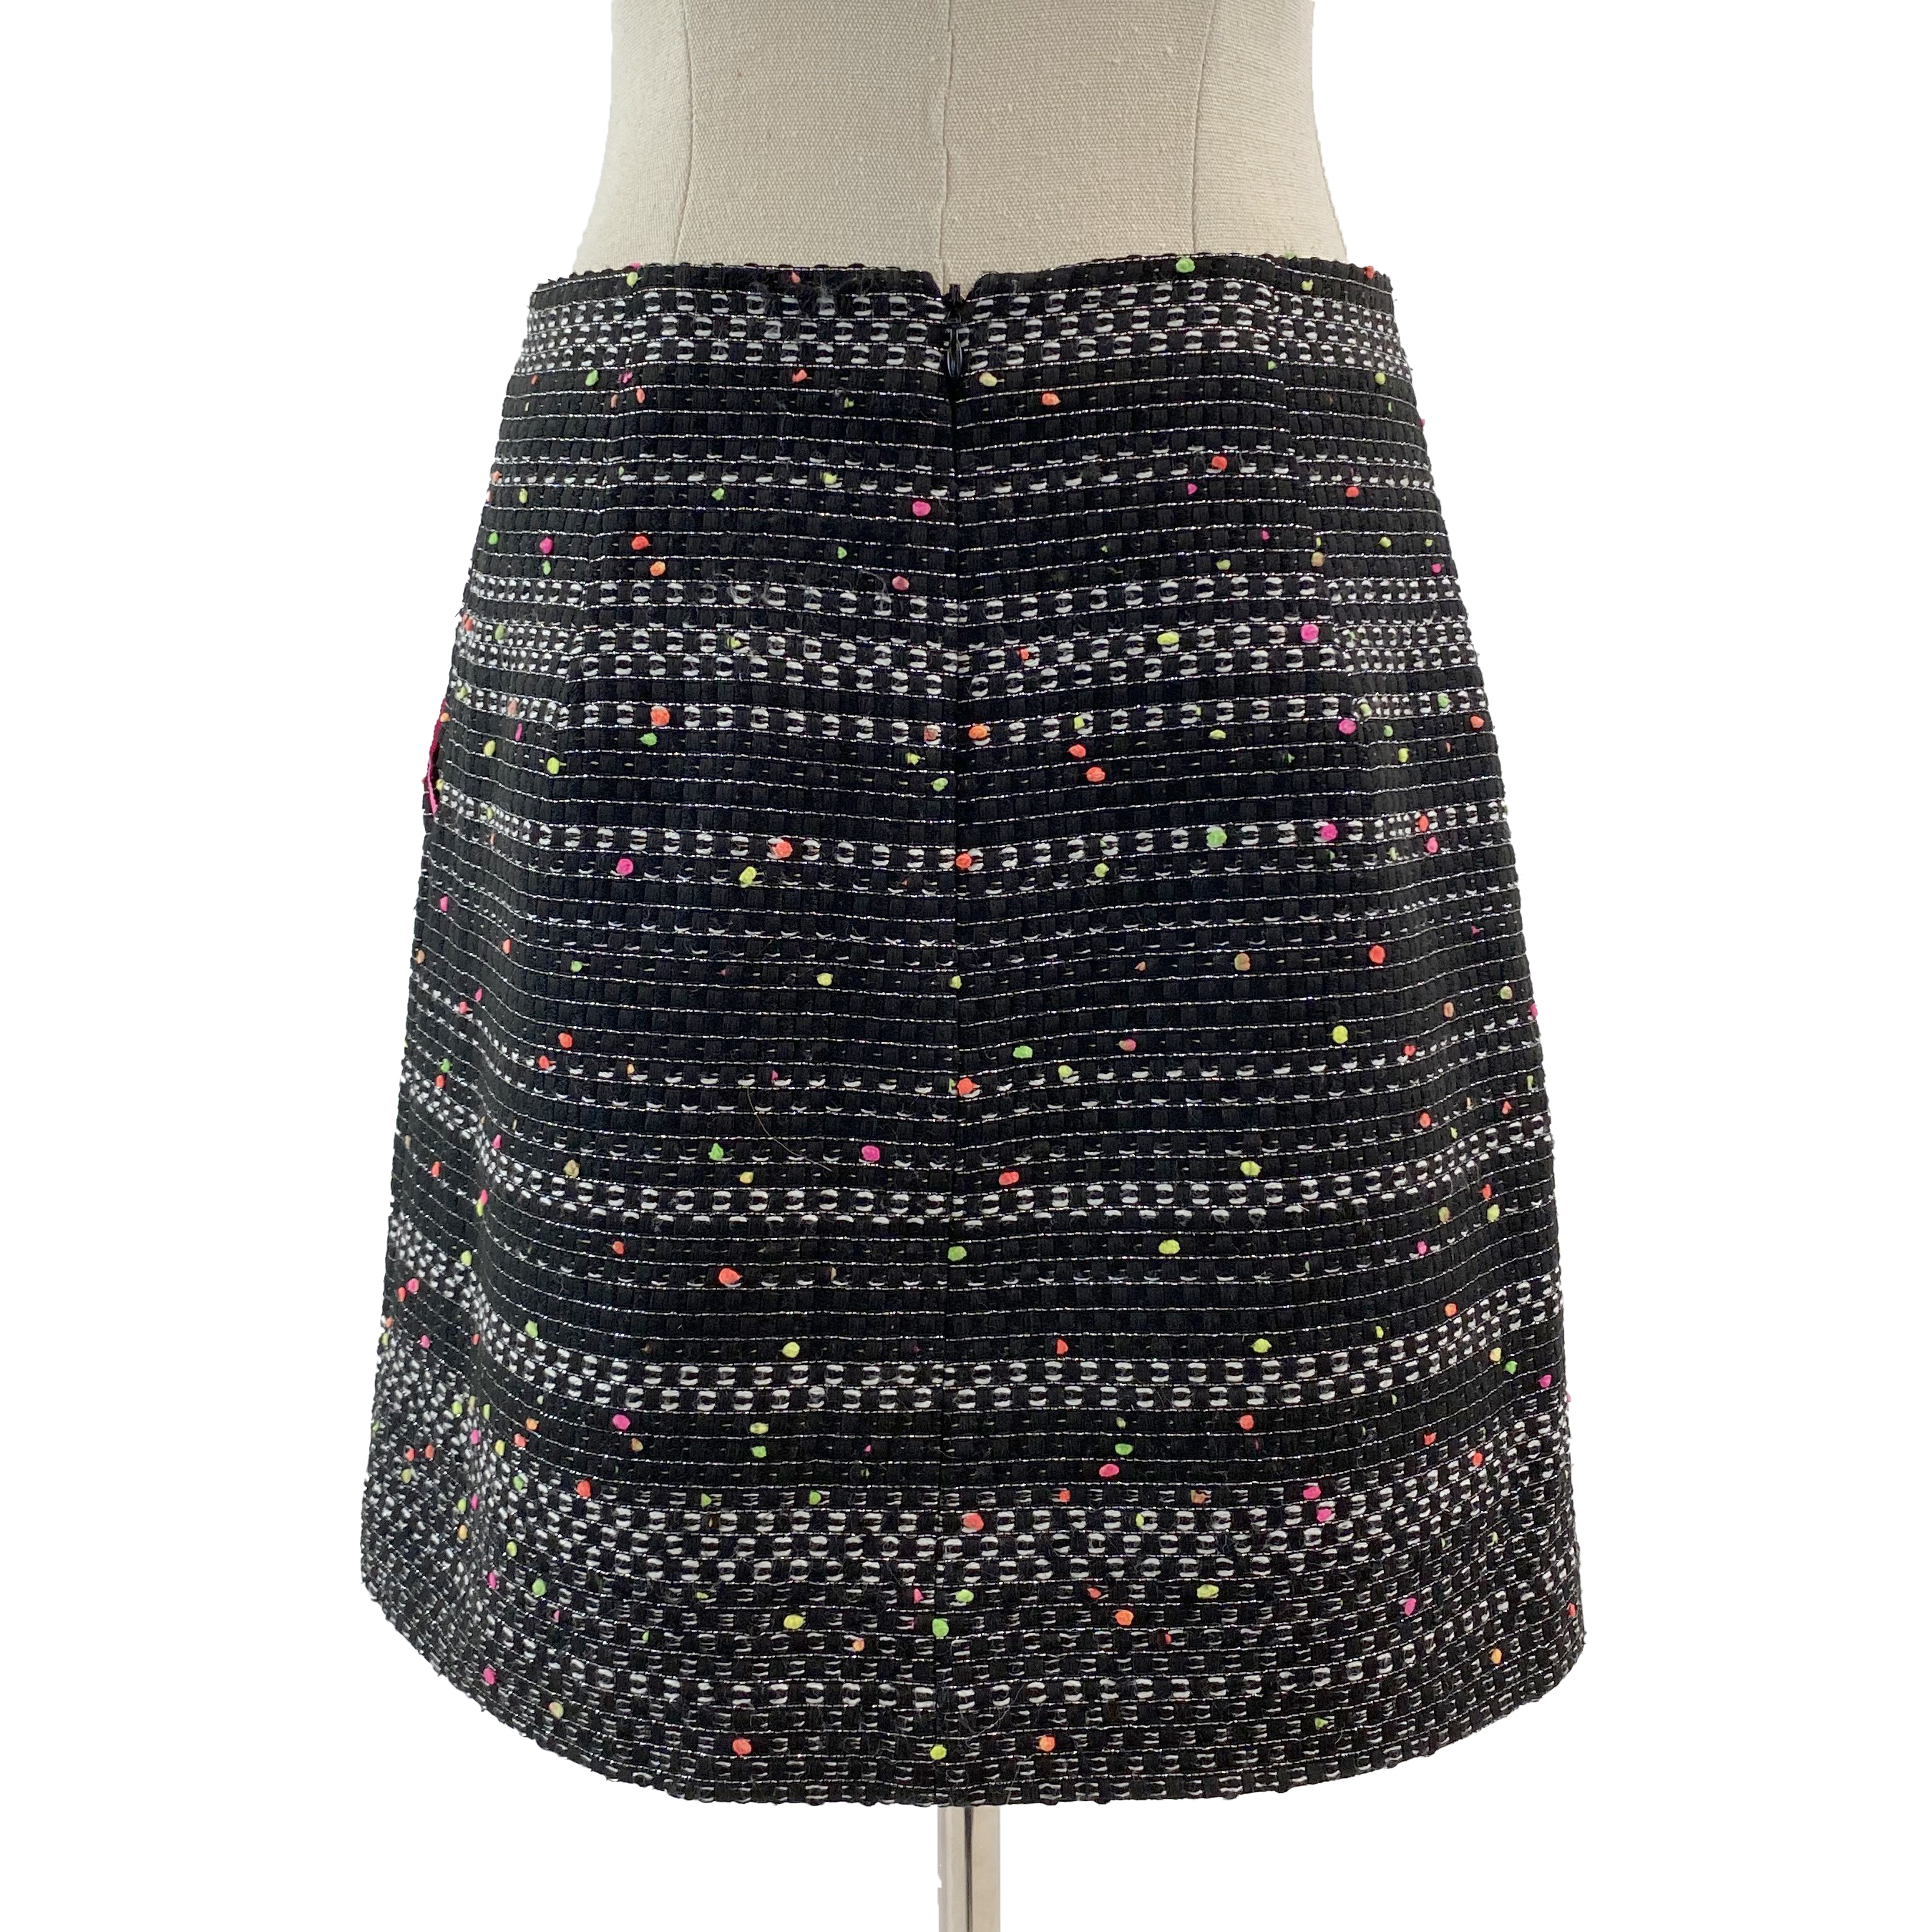 Marcs Black/Neon Mini-Skirt